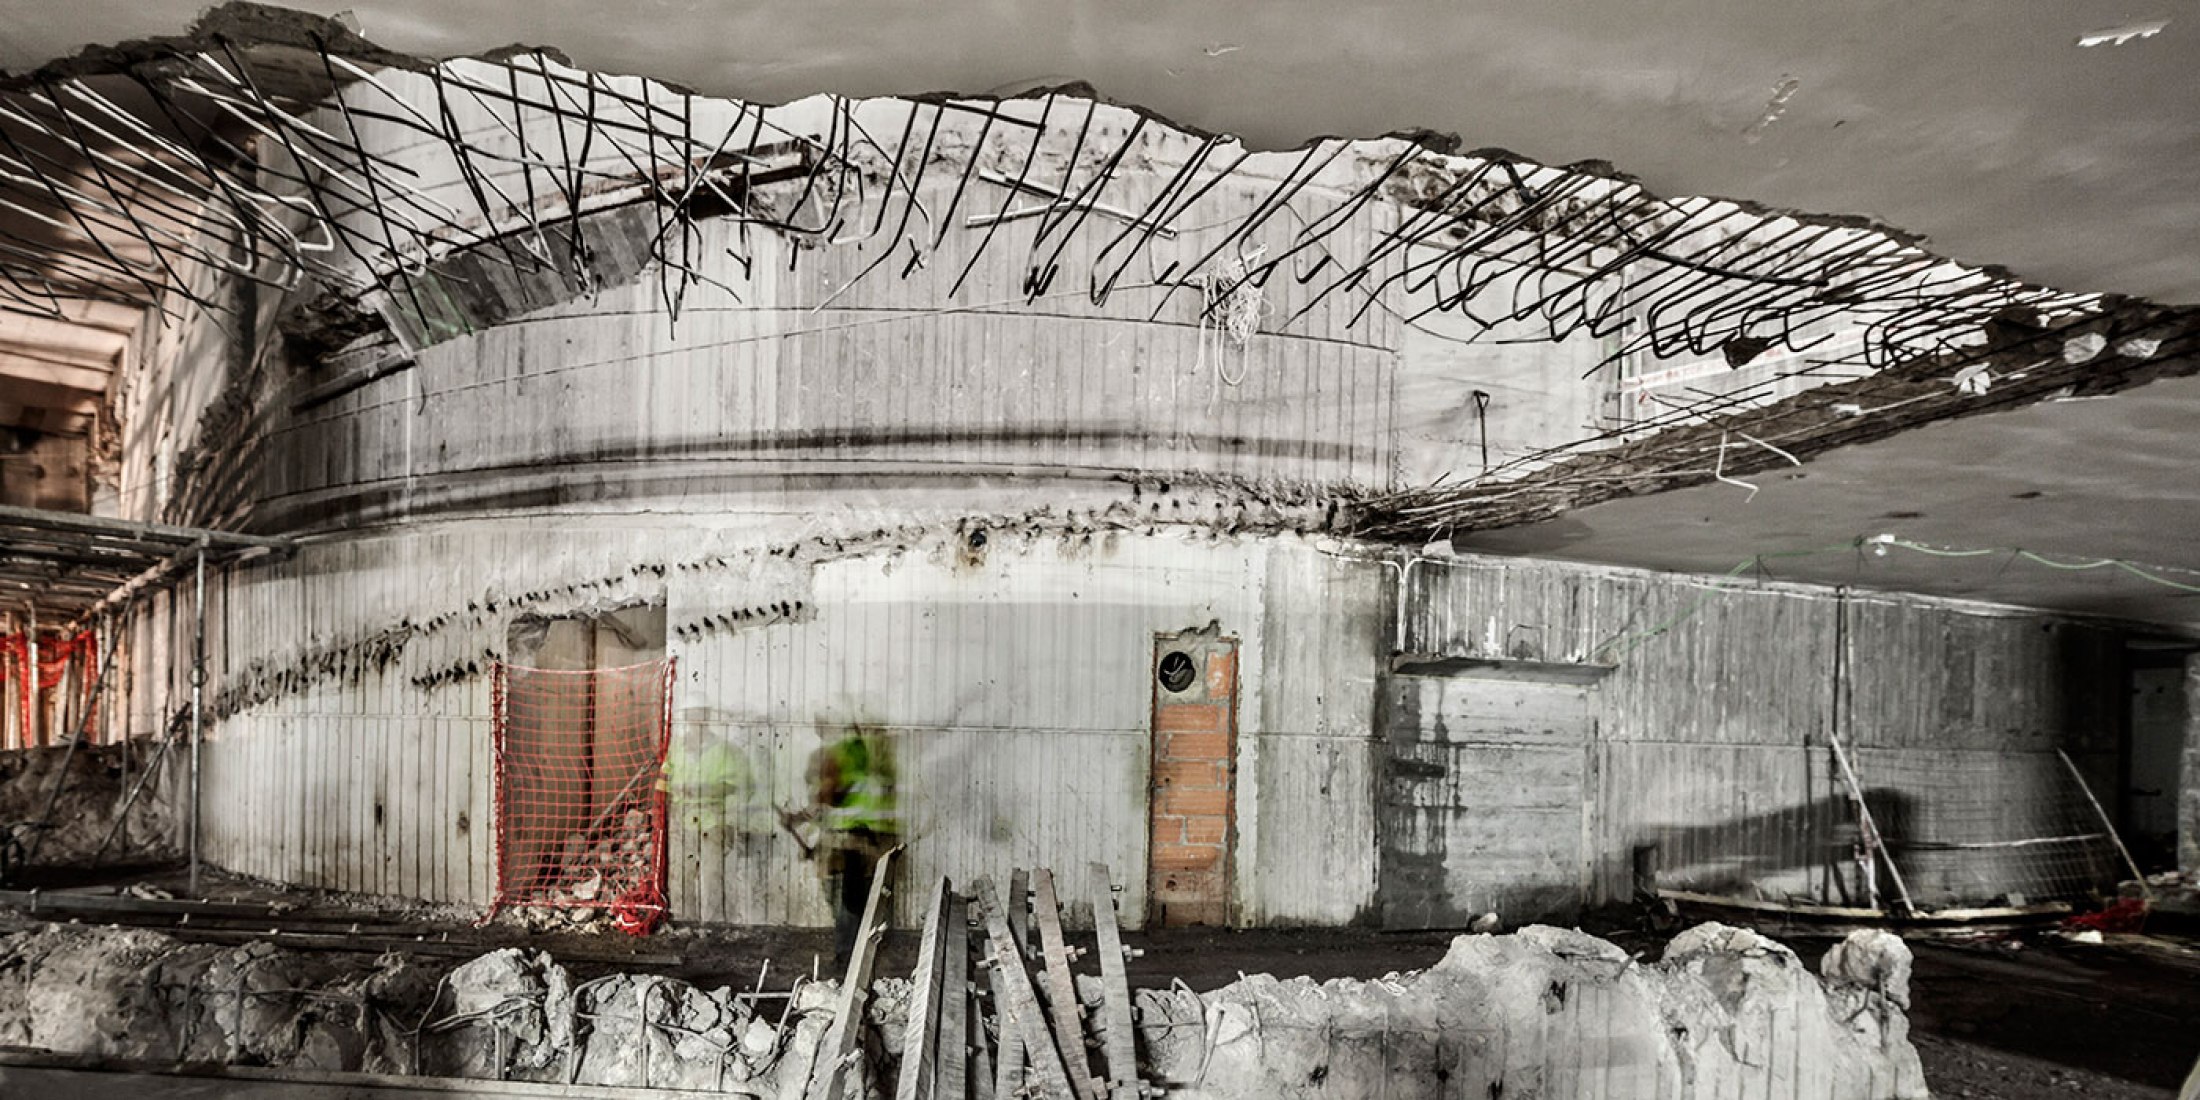 Re-edificatoria por Adrià Goula. Unfinished. Pabellón español de la Bienal de Venecia 2016. Imagen © Adrià Goula.